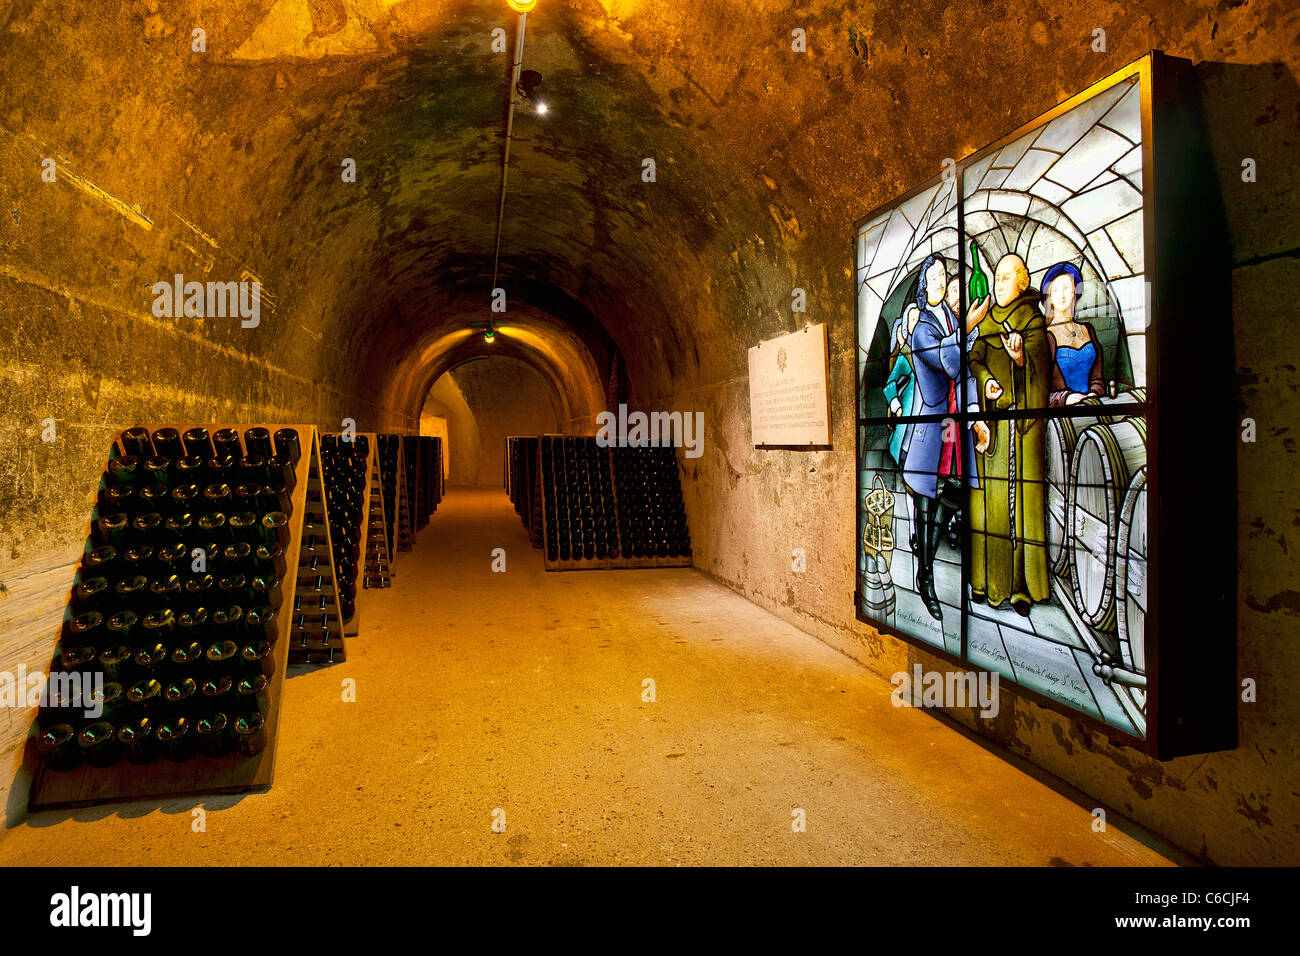 Champagne bottles in pupitre, Taittinger champagne cellar, France Stock Photo